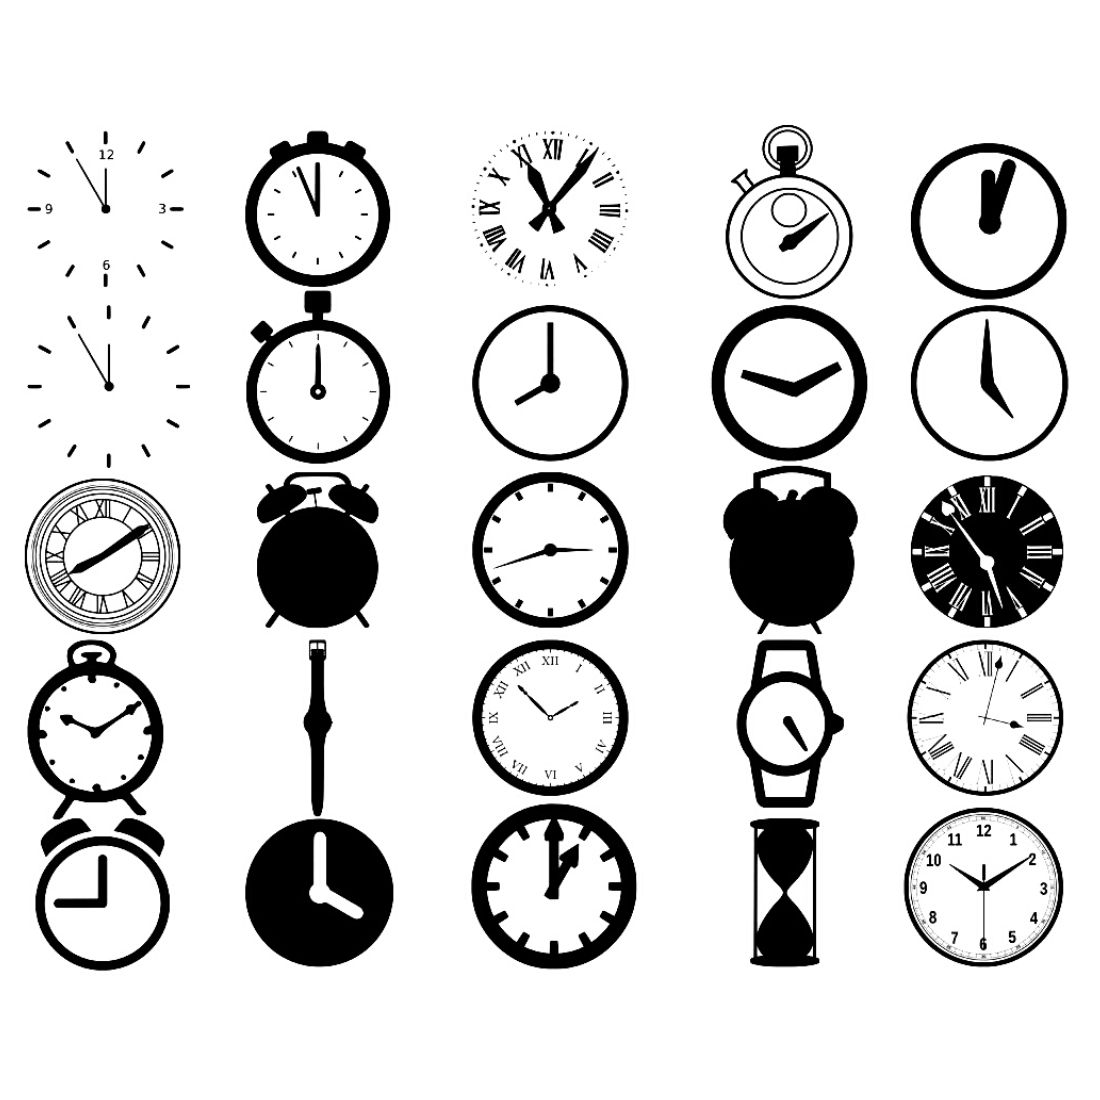 Clock Silhouette Bundles cover image.